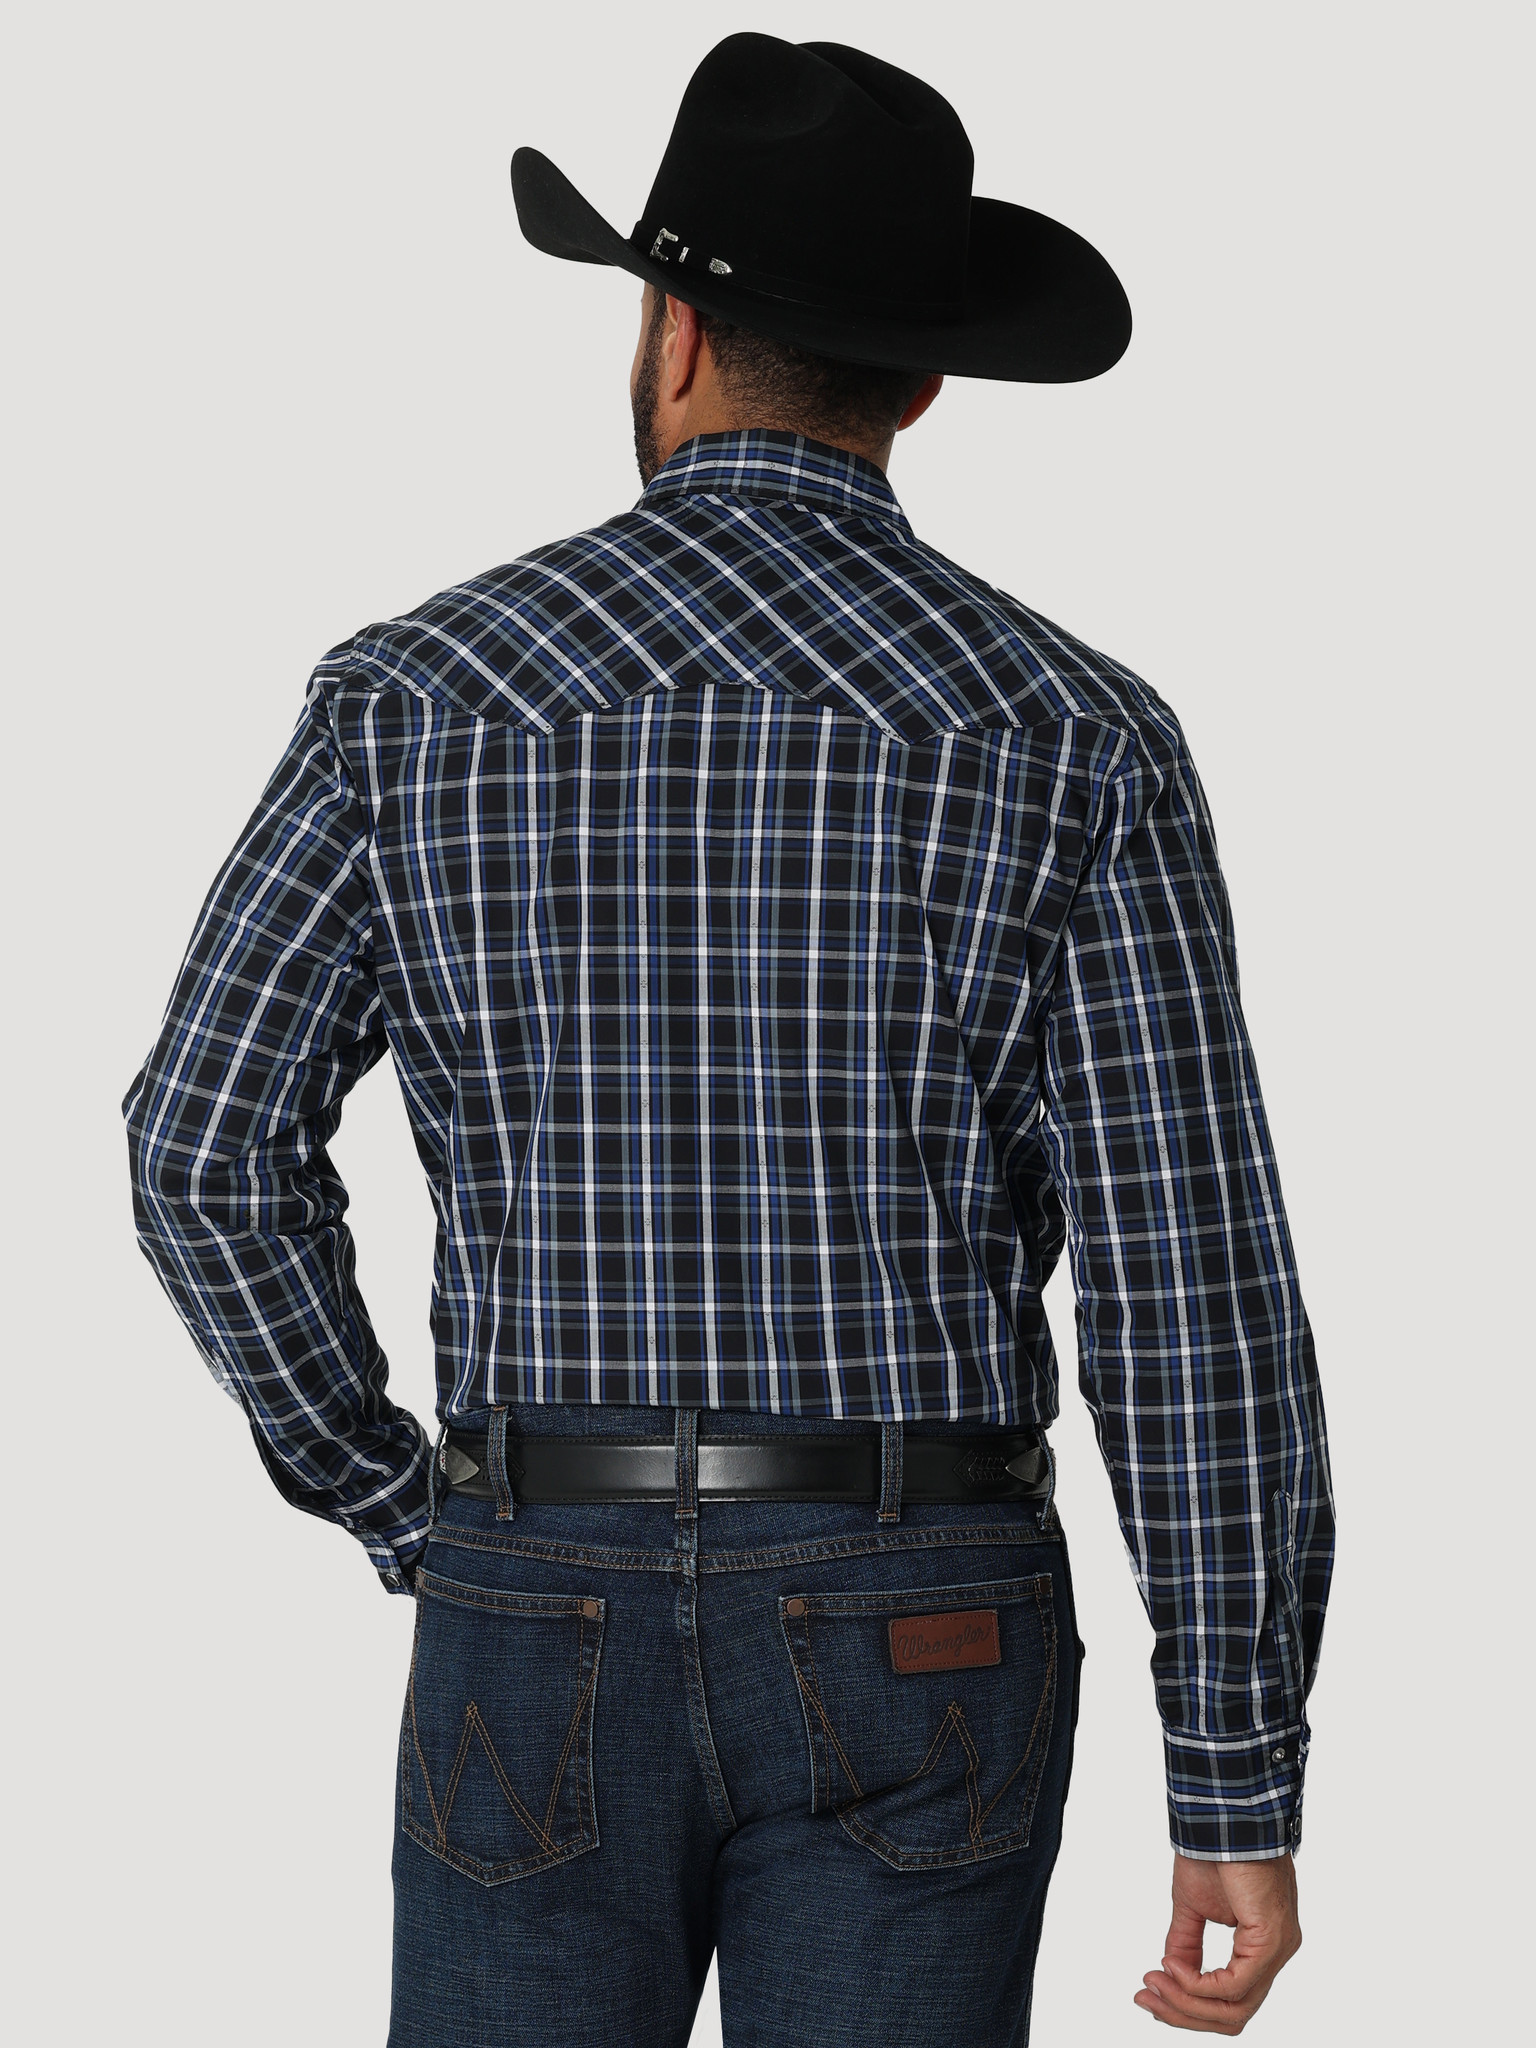 Shirt Western Black/Blue Wrangler - Wear Men\'s LS 2318682 Plaid Corral